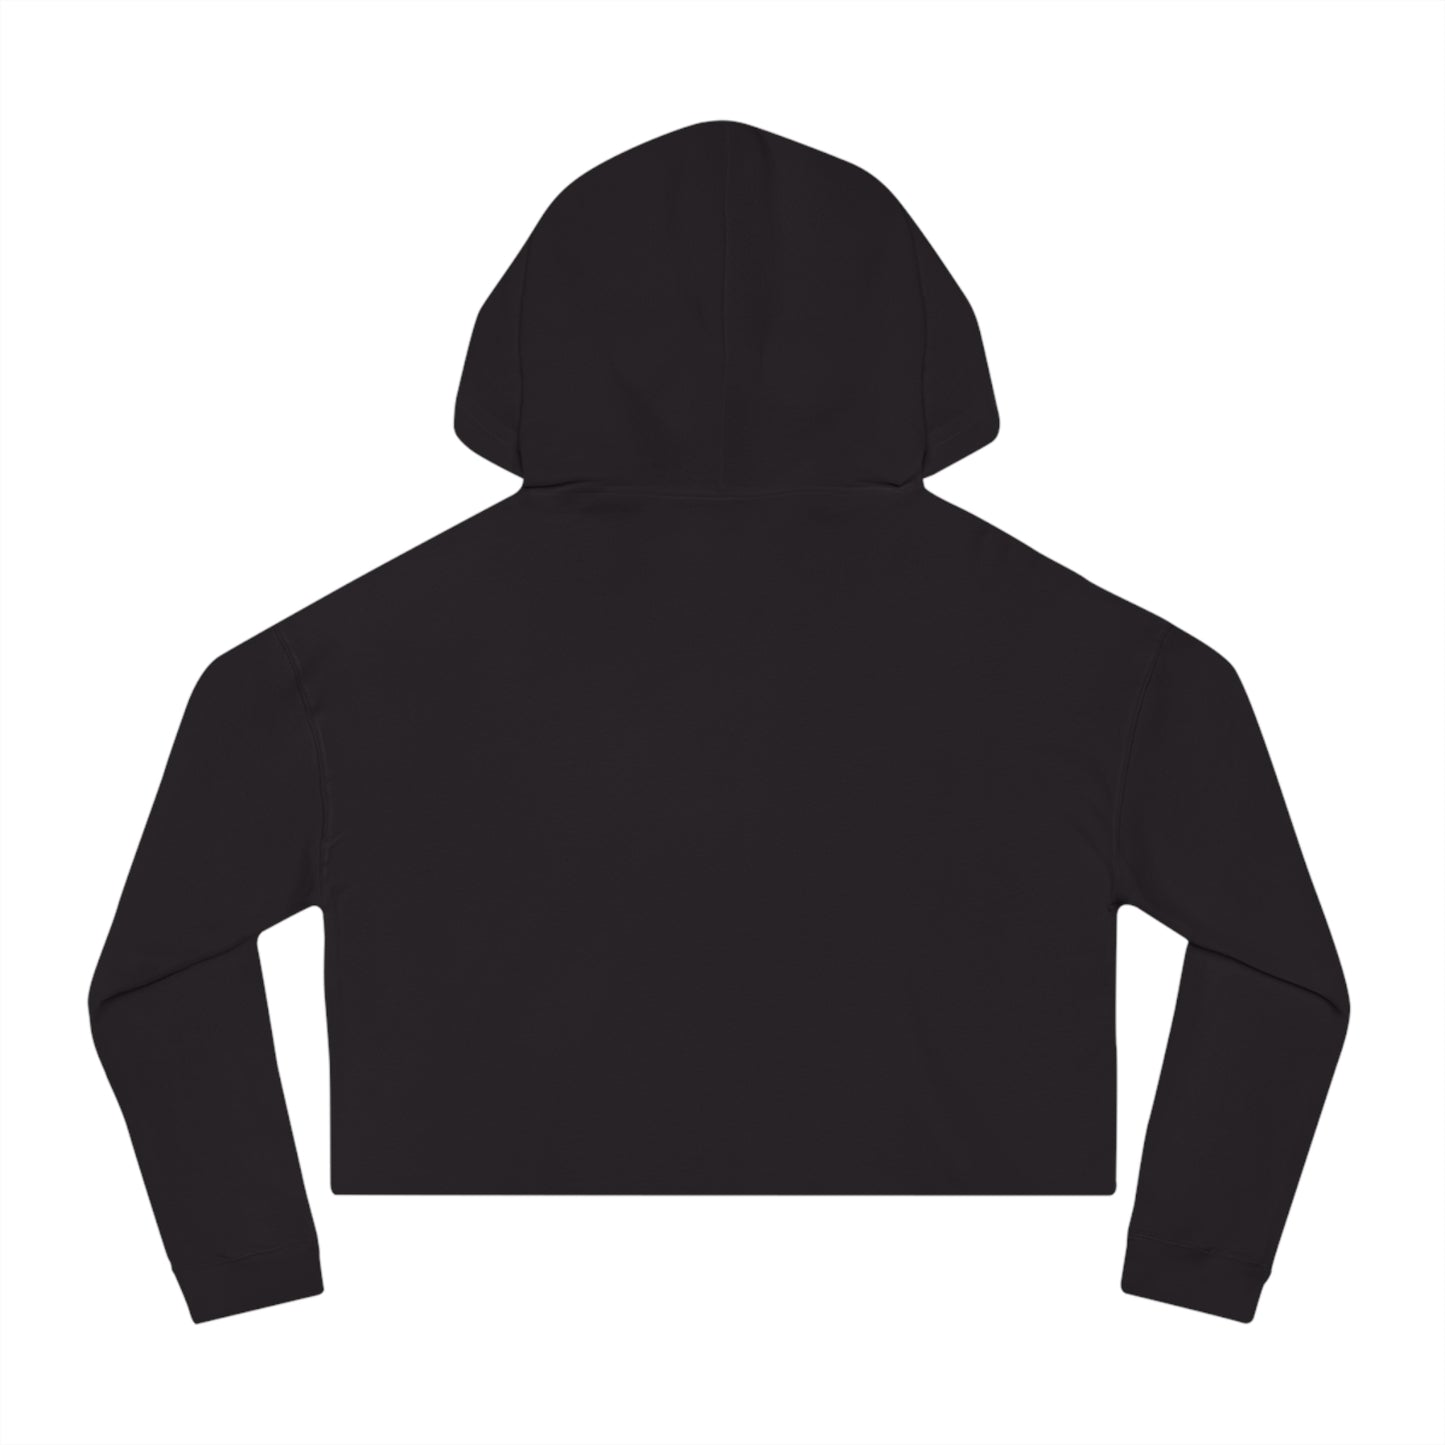 MOONSMC® OG Logo - Women’s Cropped Hooded Sweatshirt